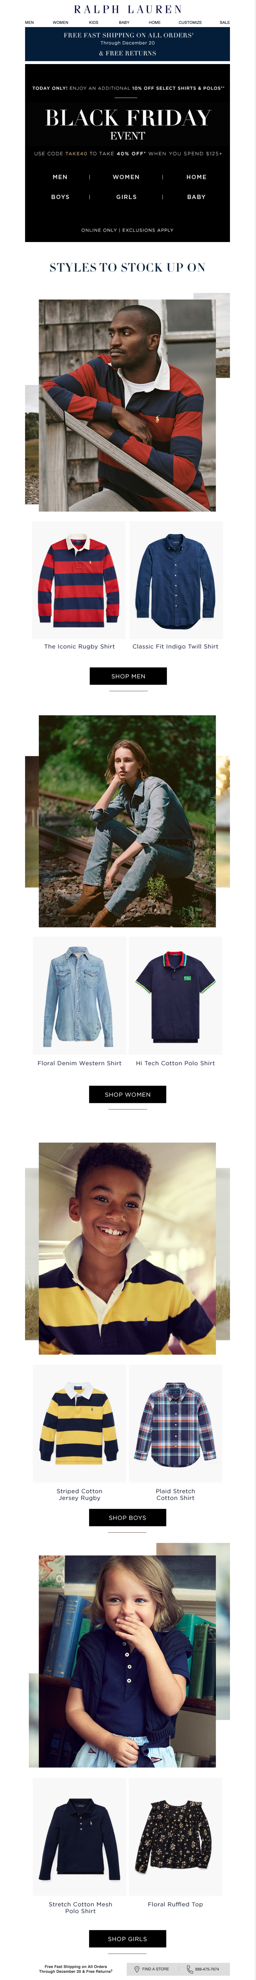 In the U.S., Ralph Lauren showcases shirt styles.